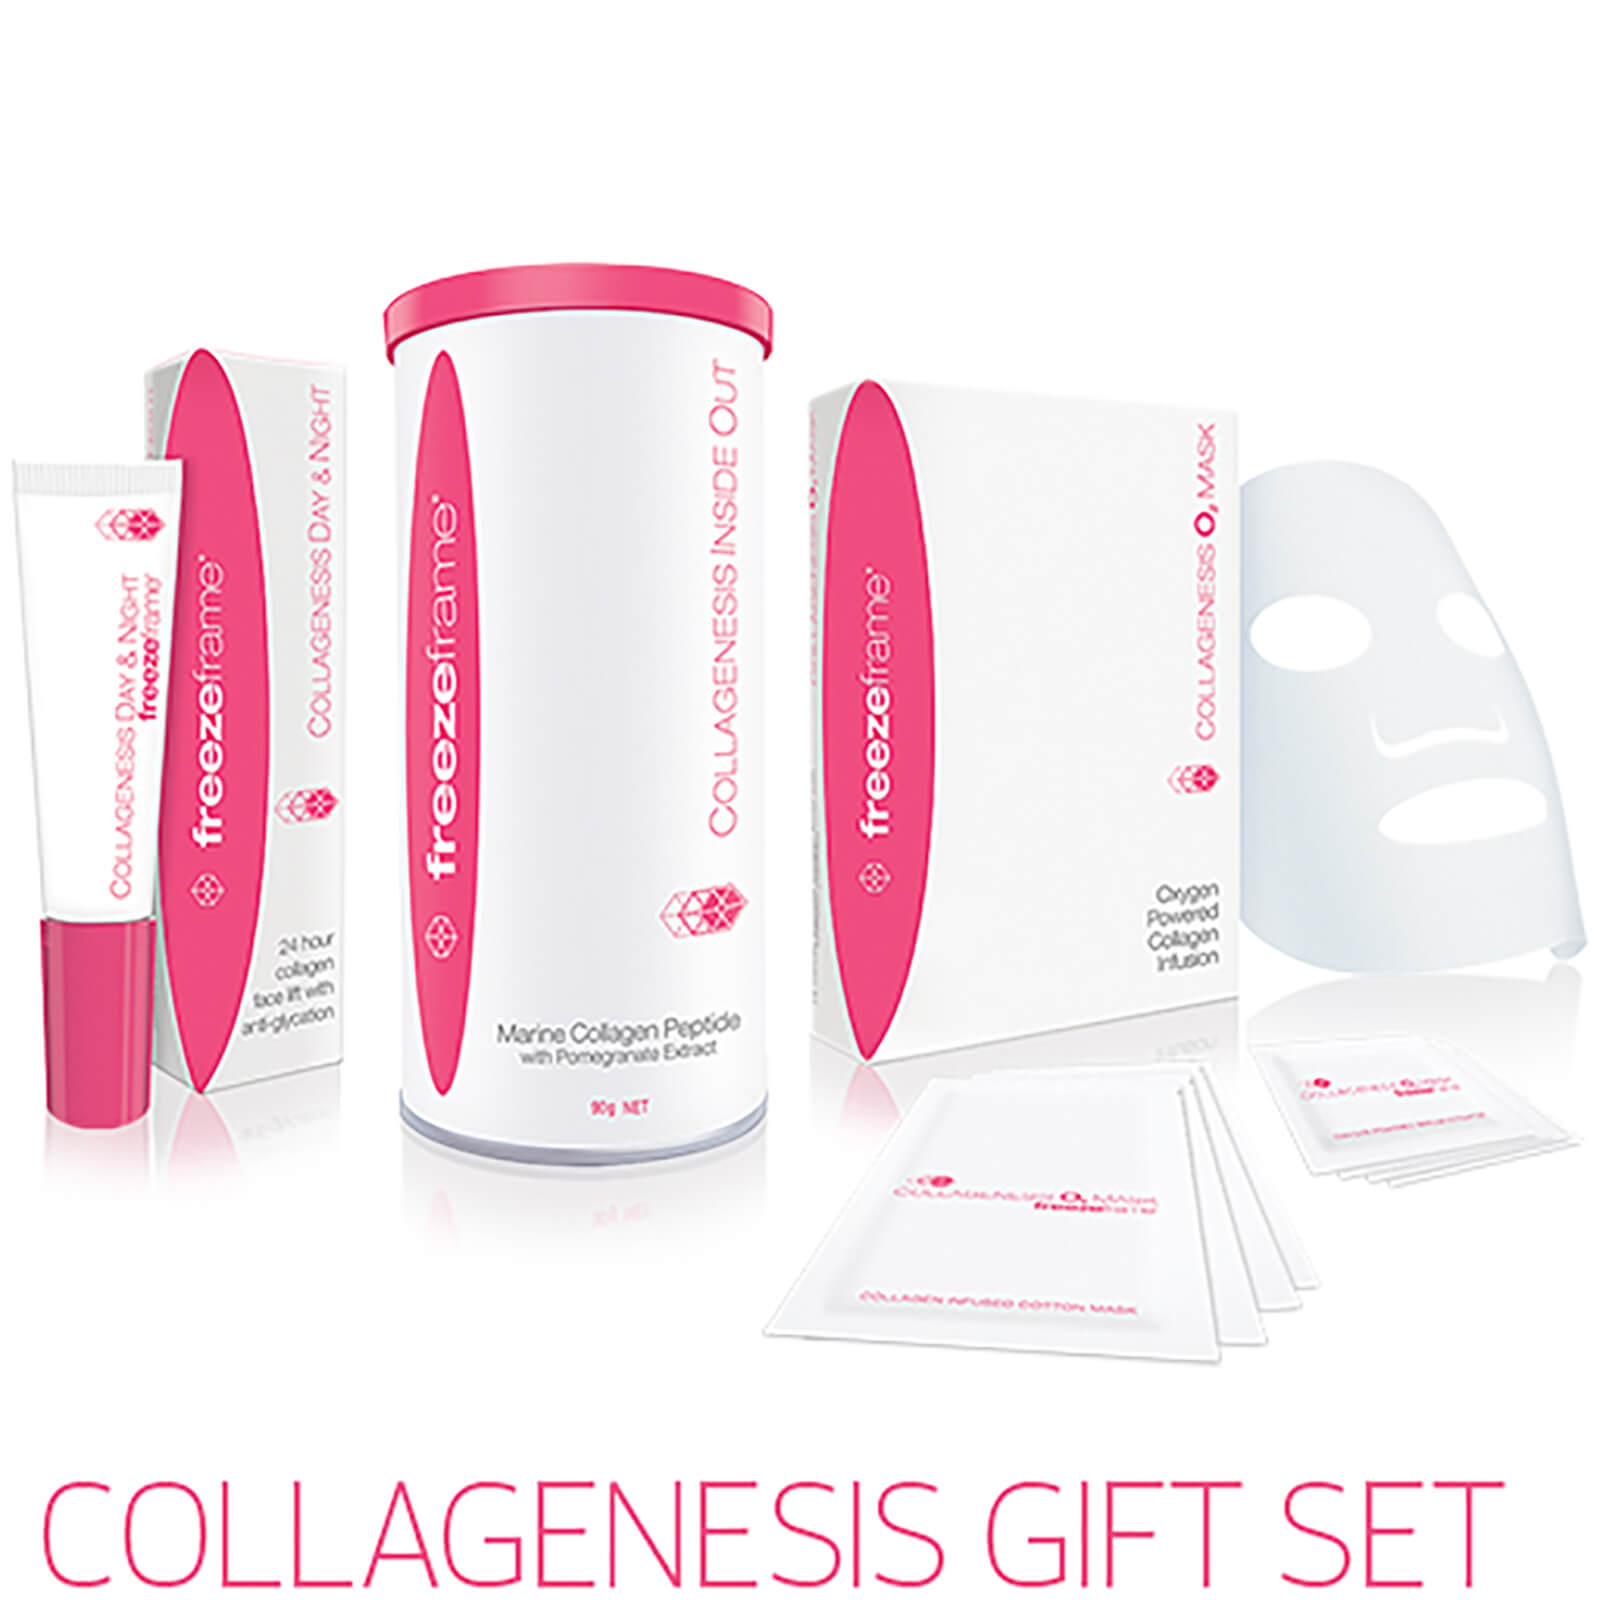 freezeframe Collagenesis Gift Pack